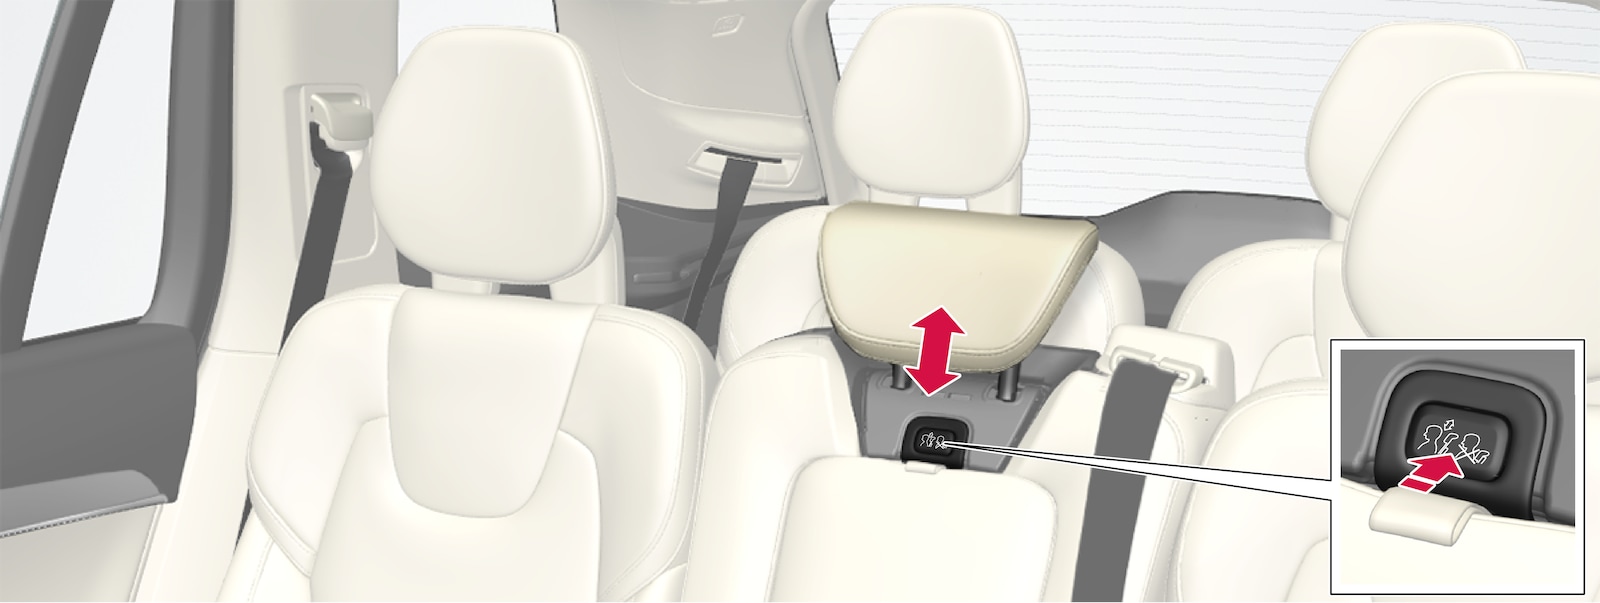 P5-1507-2nd seat row-Adjust headrest center back